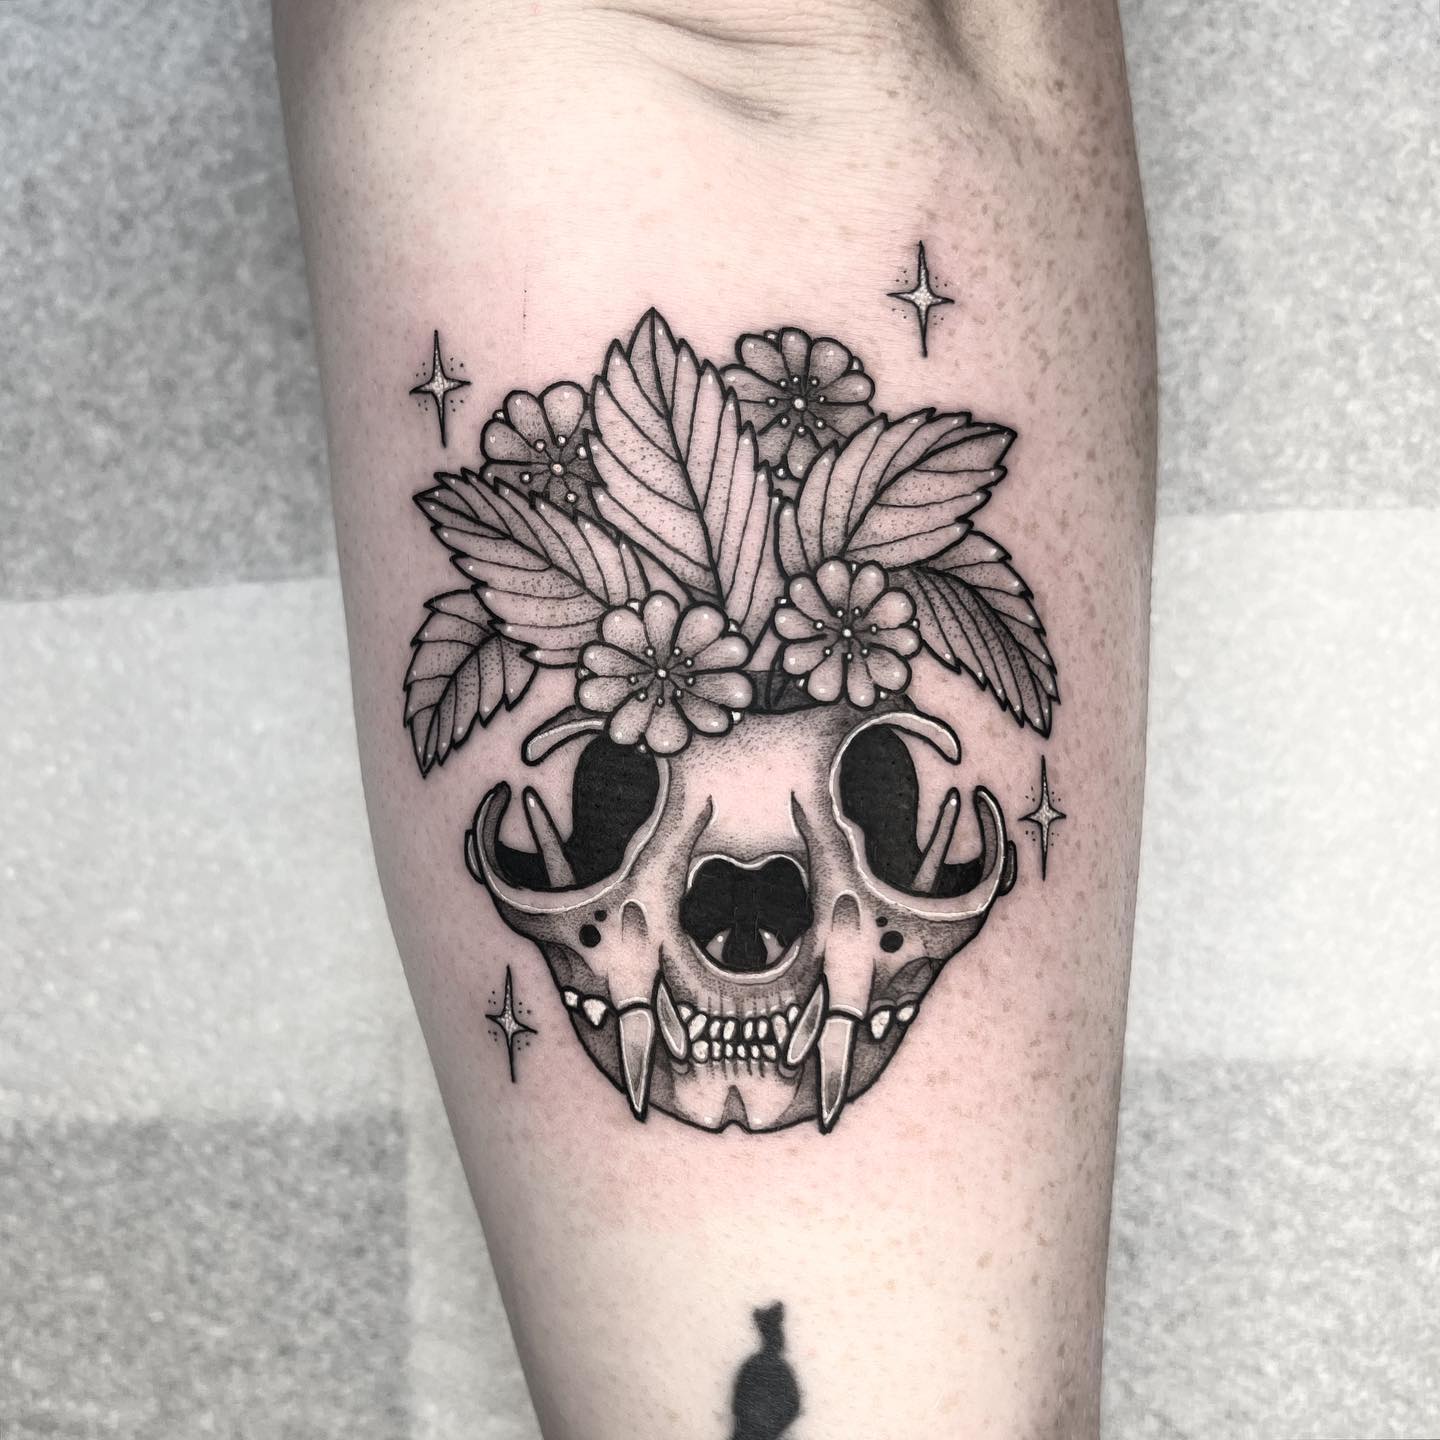 Simple skull tattoo by draculatattoos